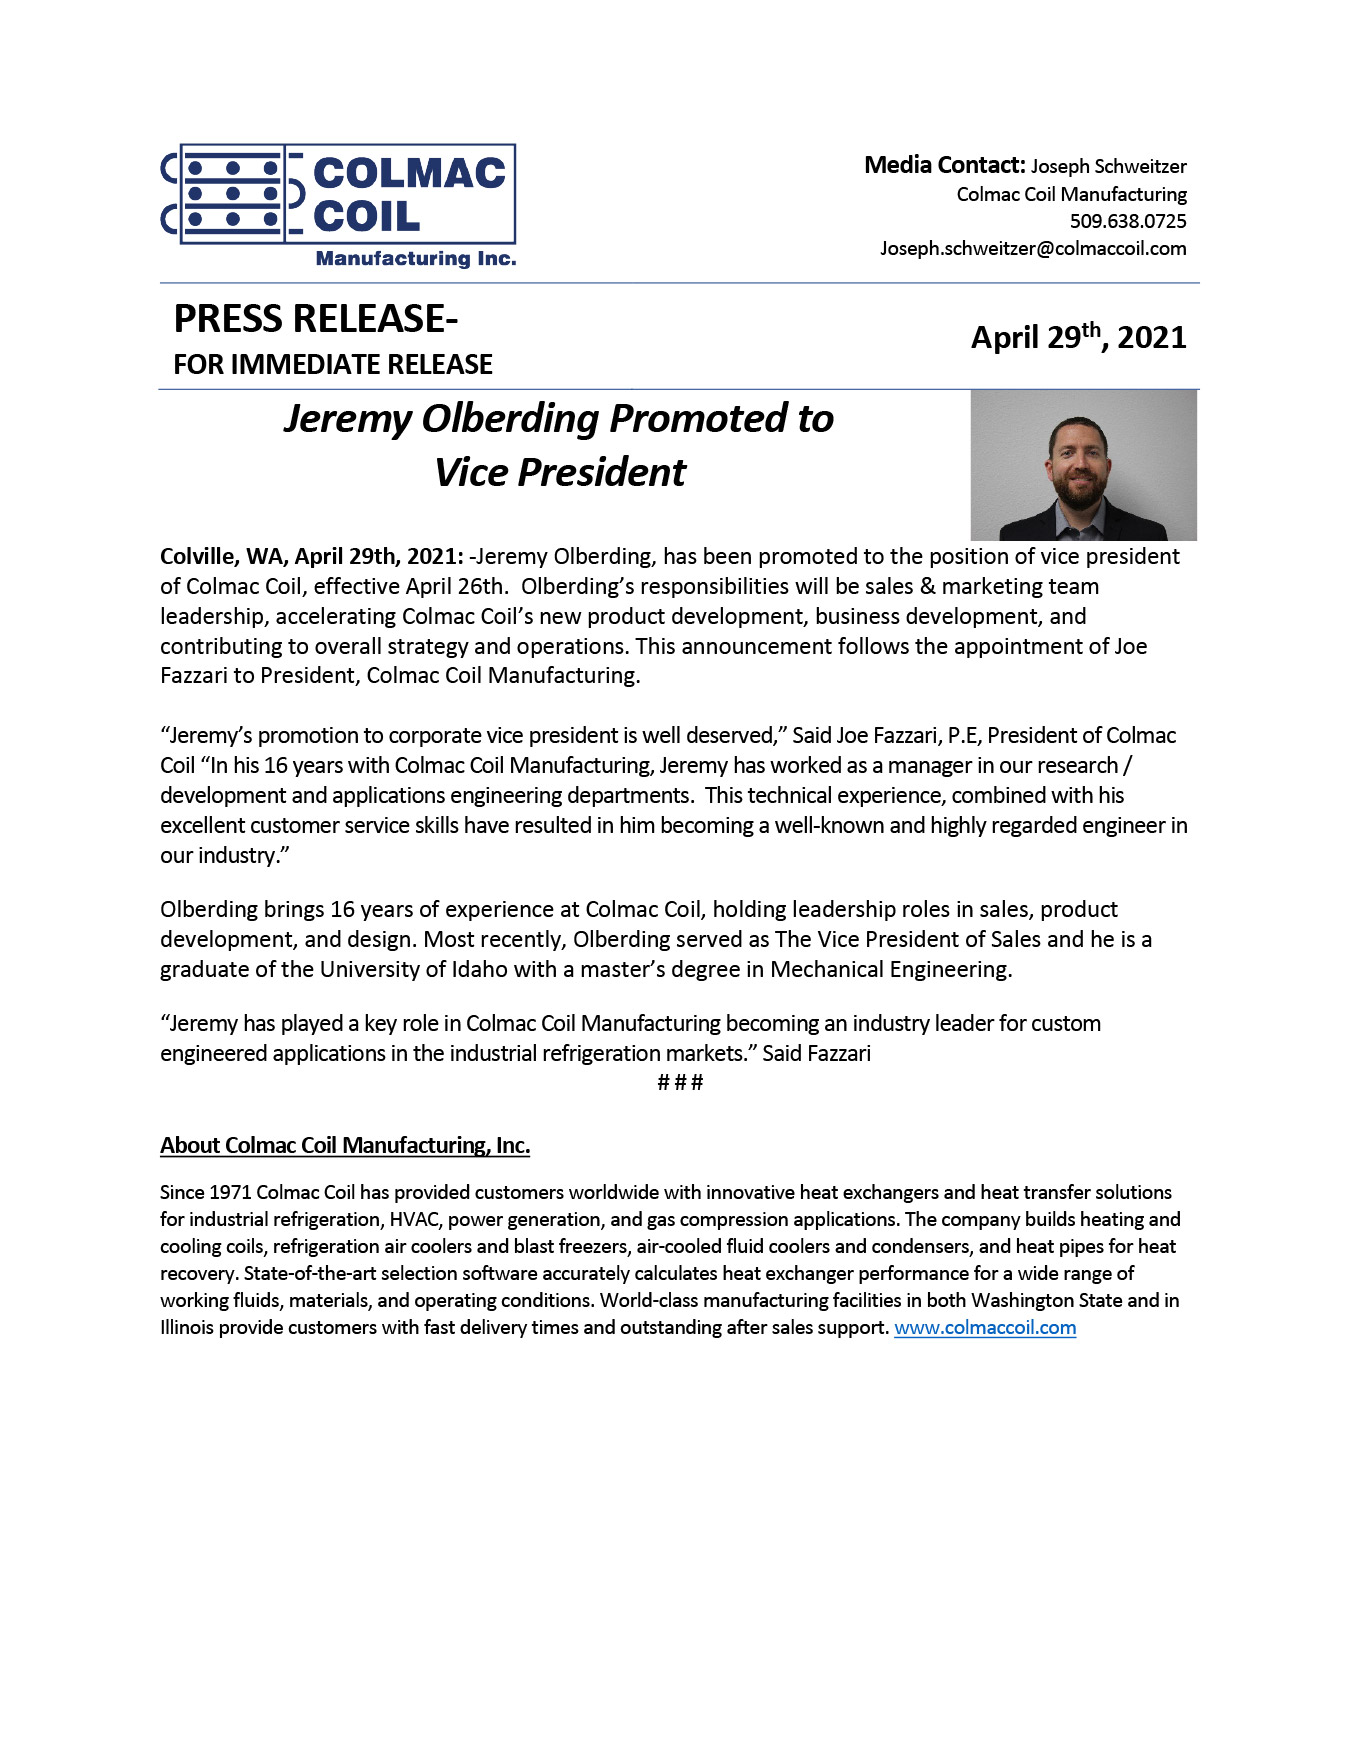 Jeremy Olberding Promoted to Vice President